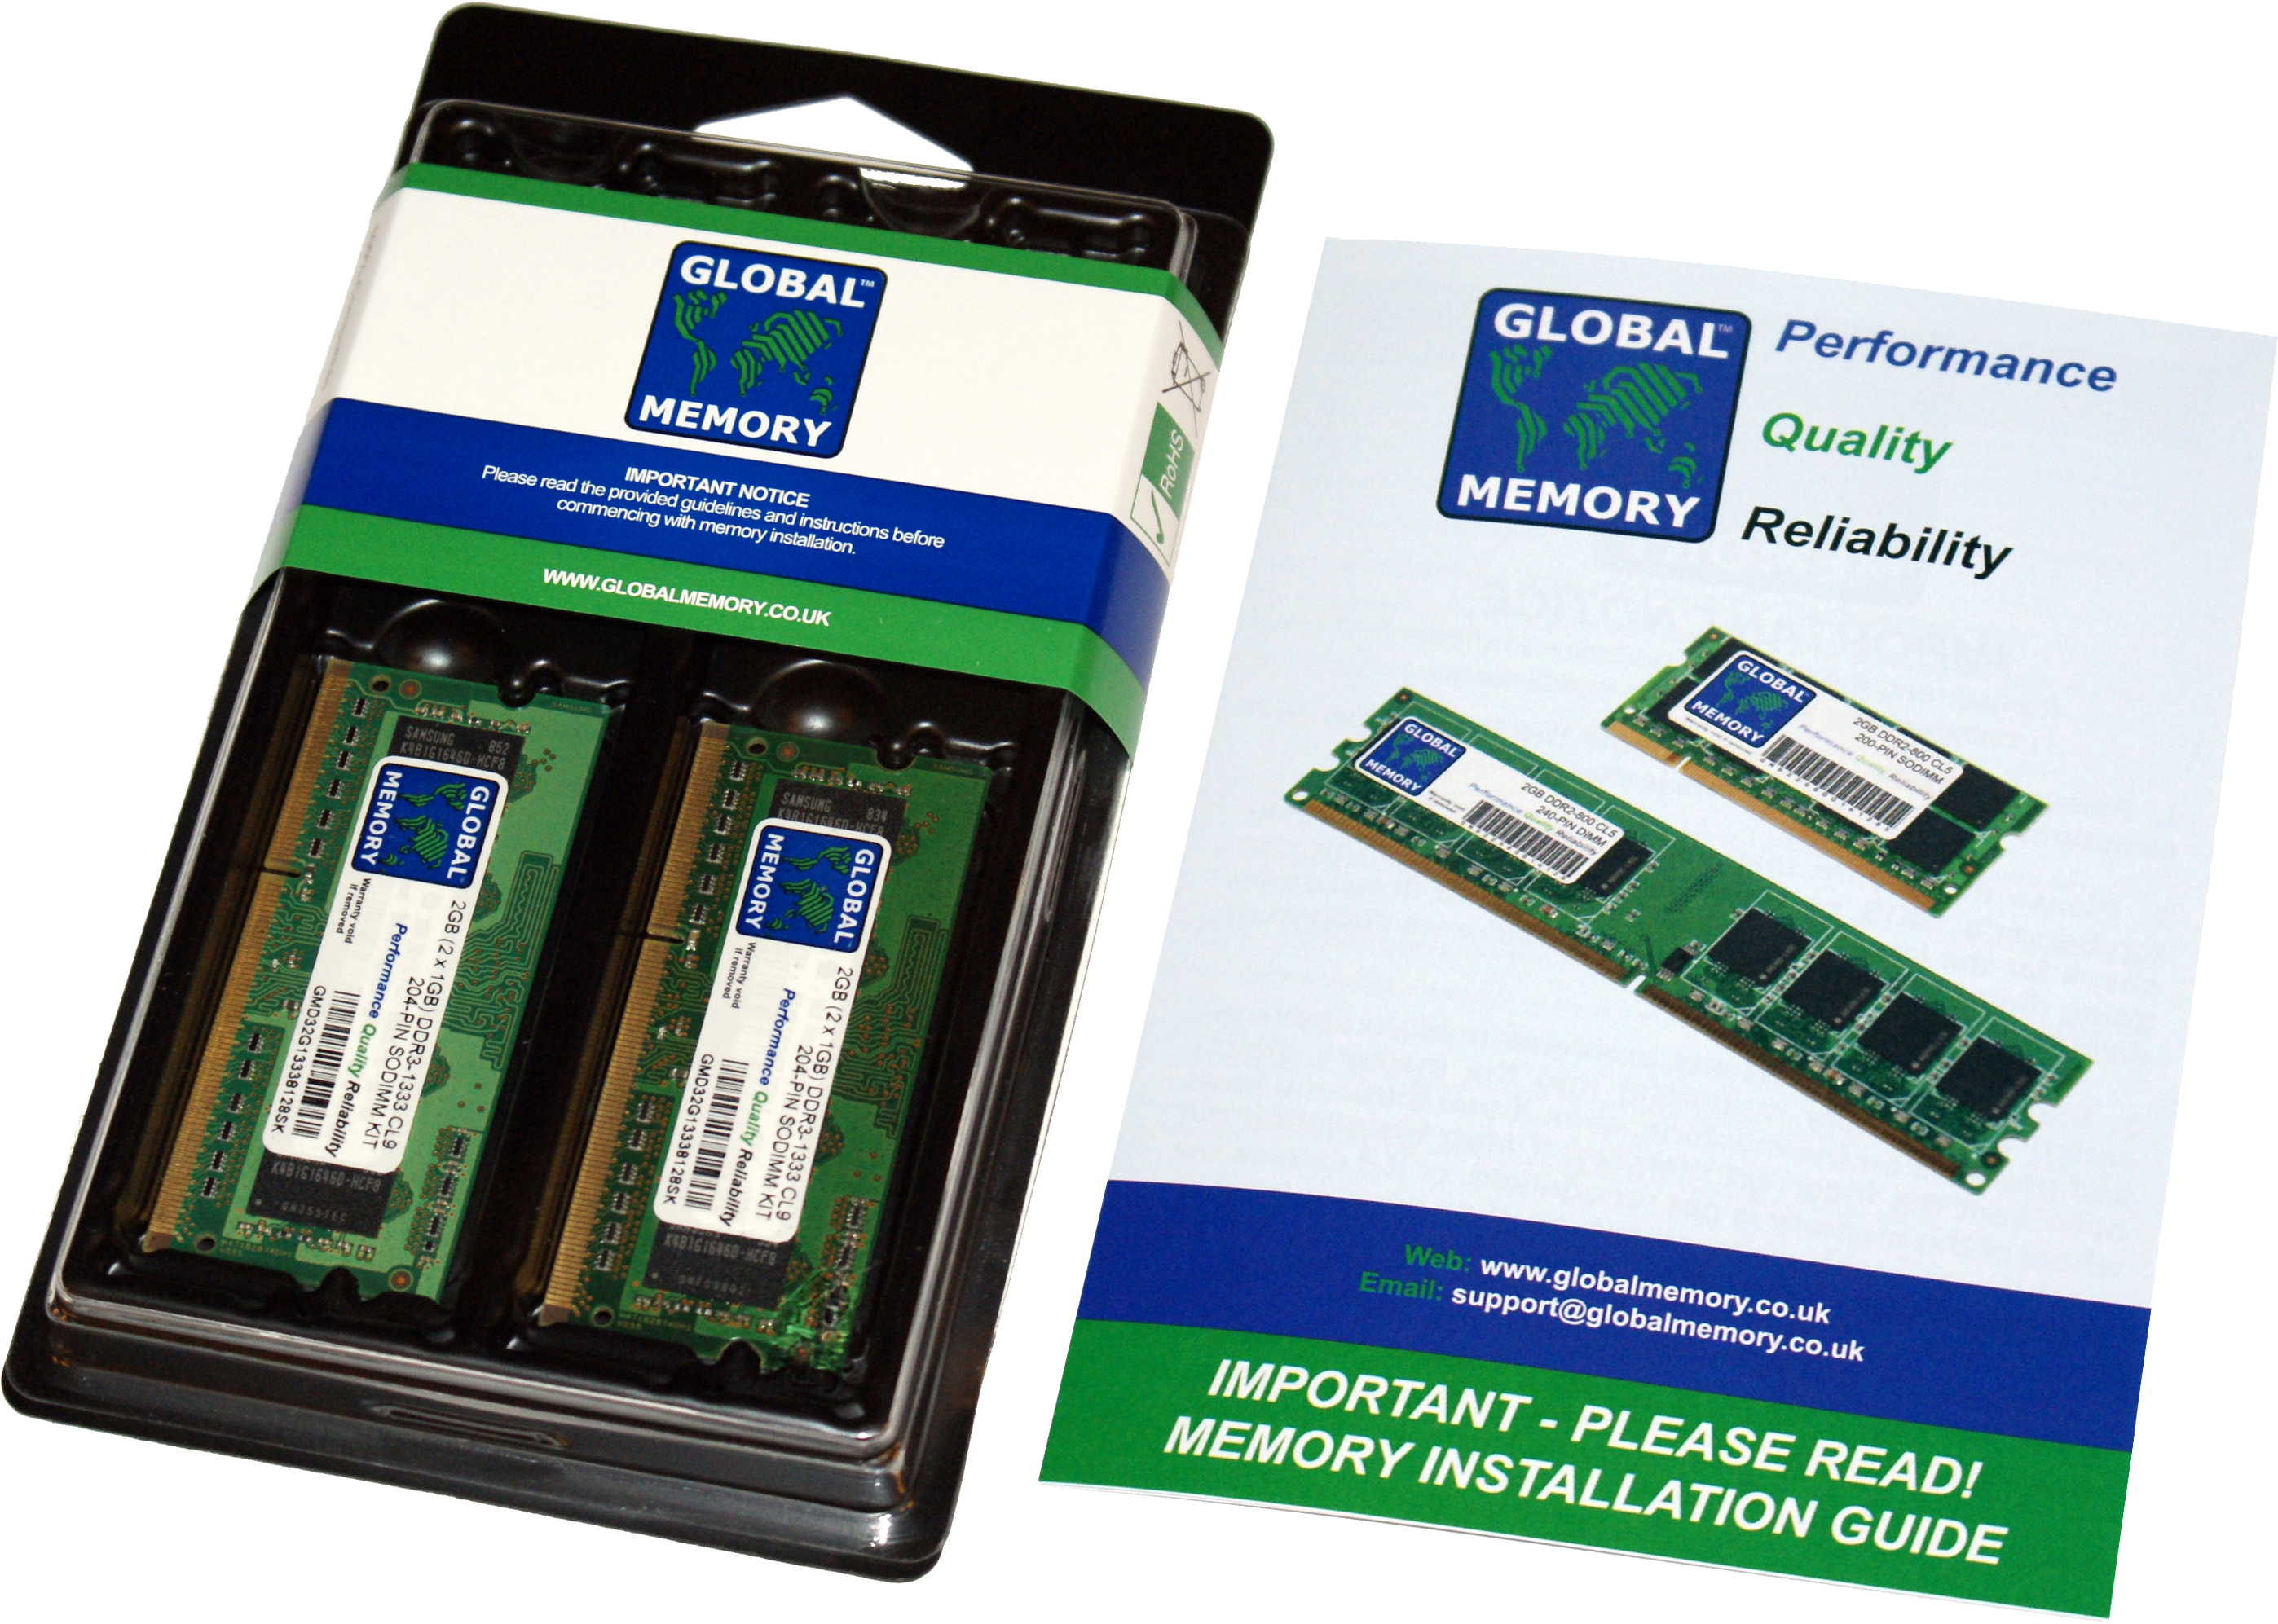 8GB (2 x 4GB) DDR4 2933MHz PC4-23400 260-PIN SODIMM MEMORY RAM KIT FOR PACKARD BELL LAPTOPS/NOTEBOOKS